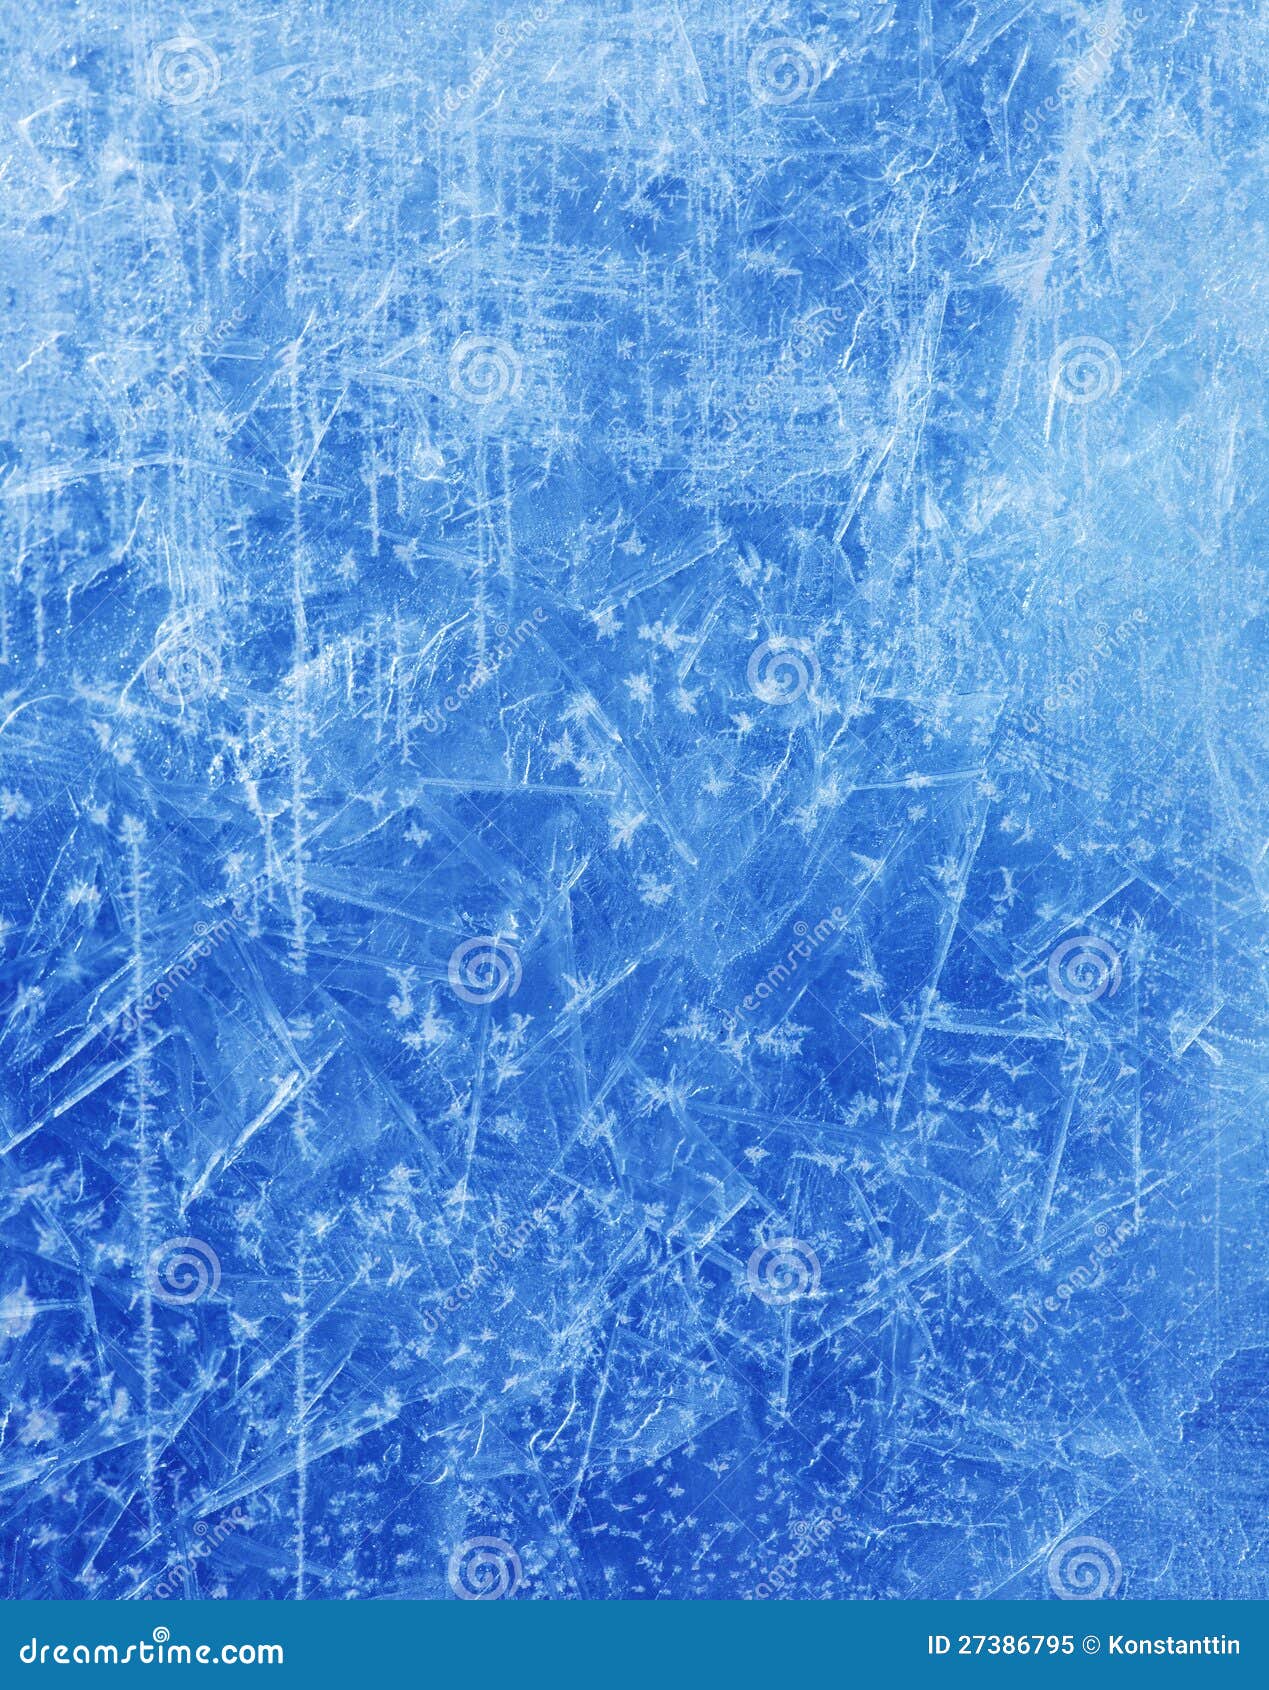 Синий каток. Лед фон. Ледяной фон. Лед для фотошопа. Хоккейный лед фон.